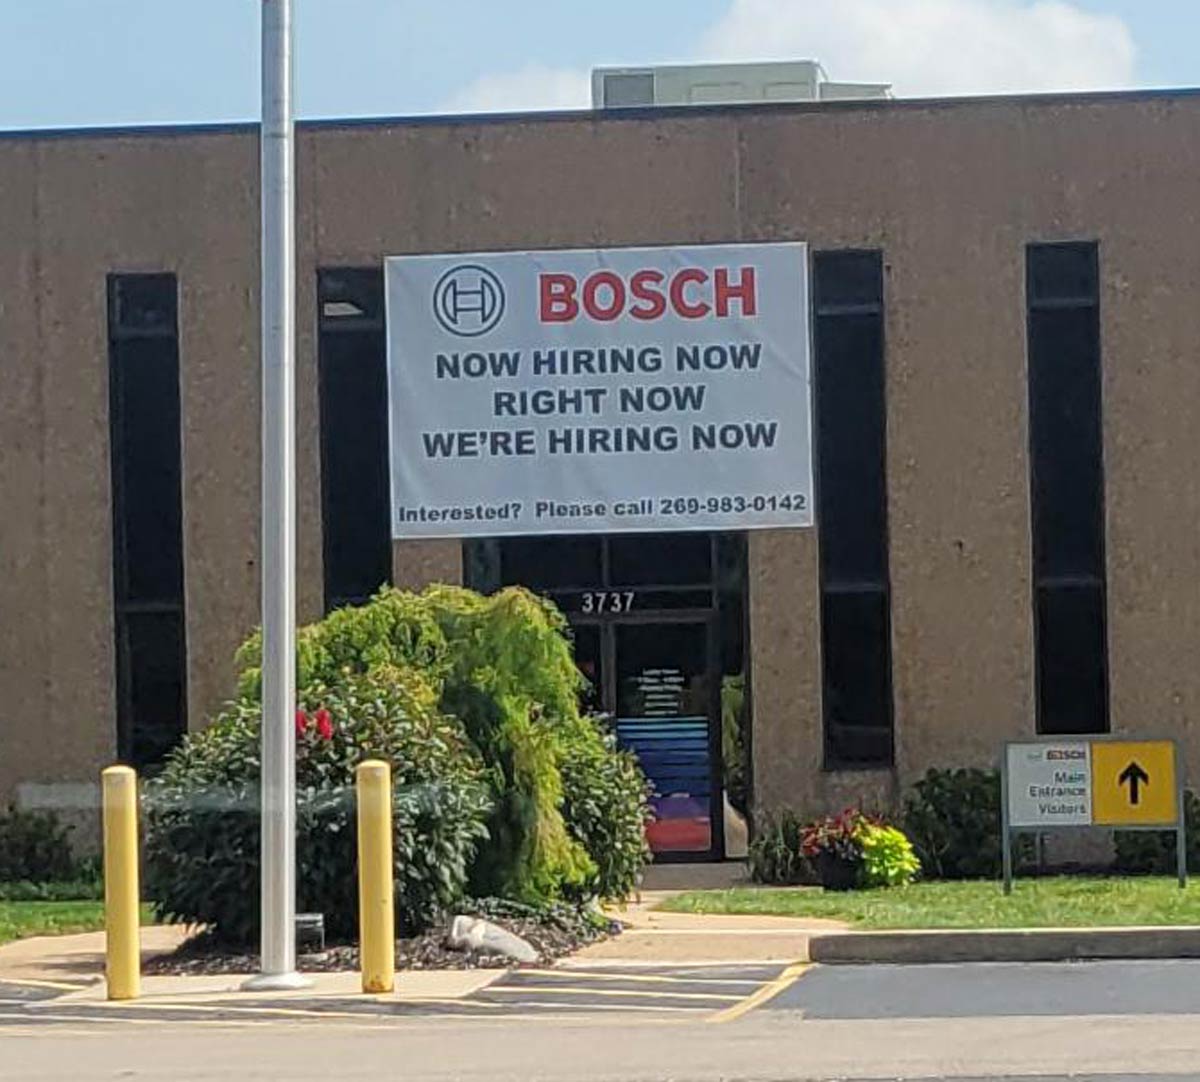 Think Bosch might be hiring